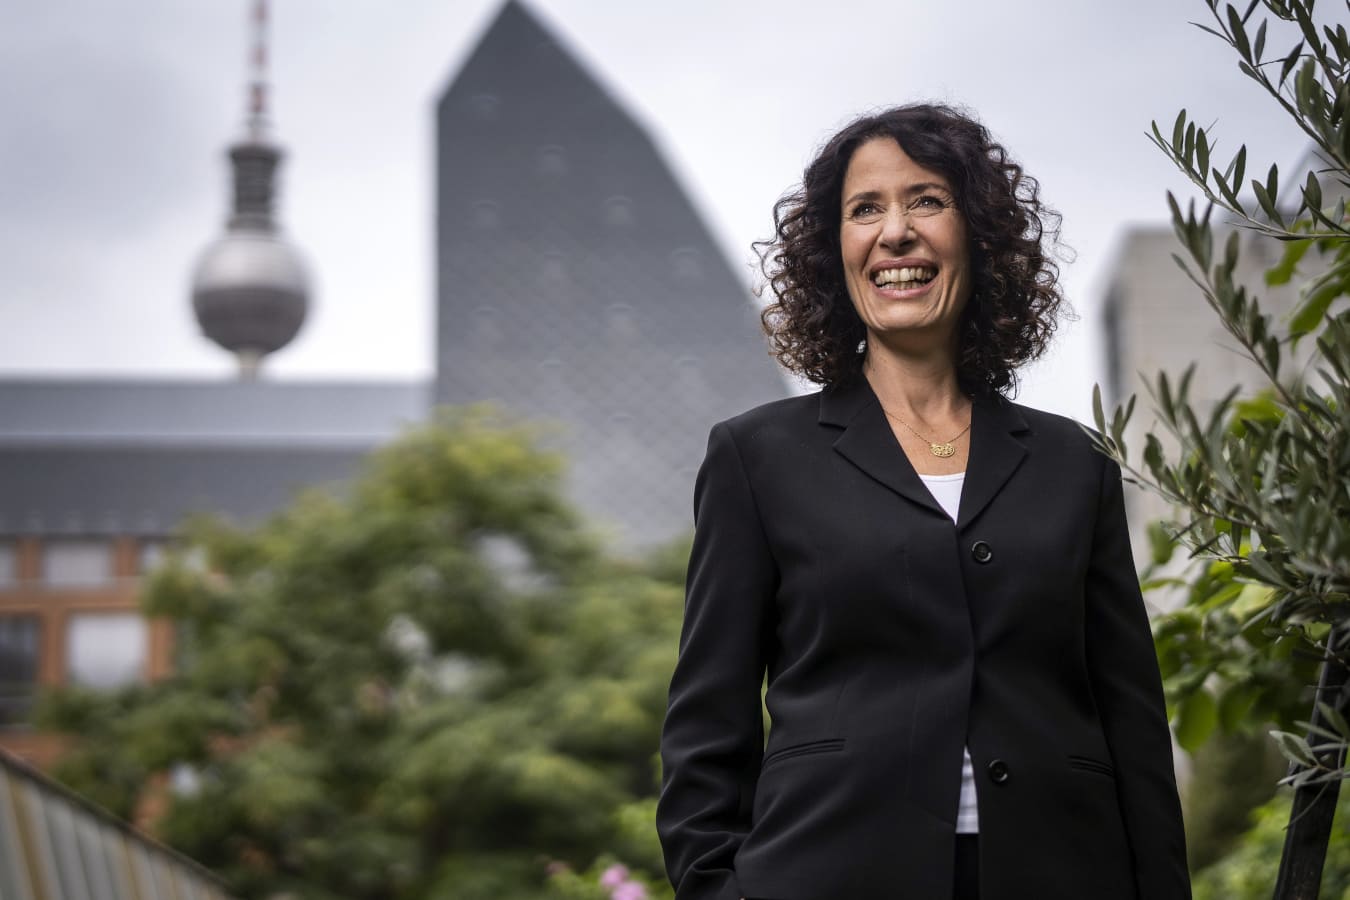 Wahl in Berlin 2021 – Bettina Jarasch, Spitzenkandidatin der Grünen